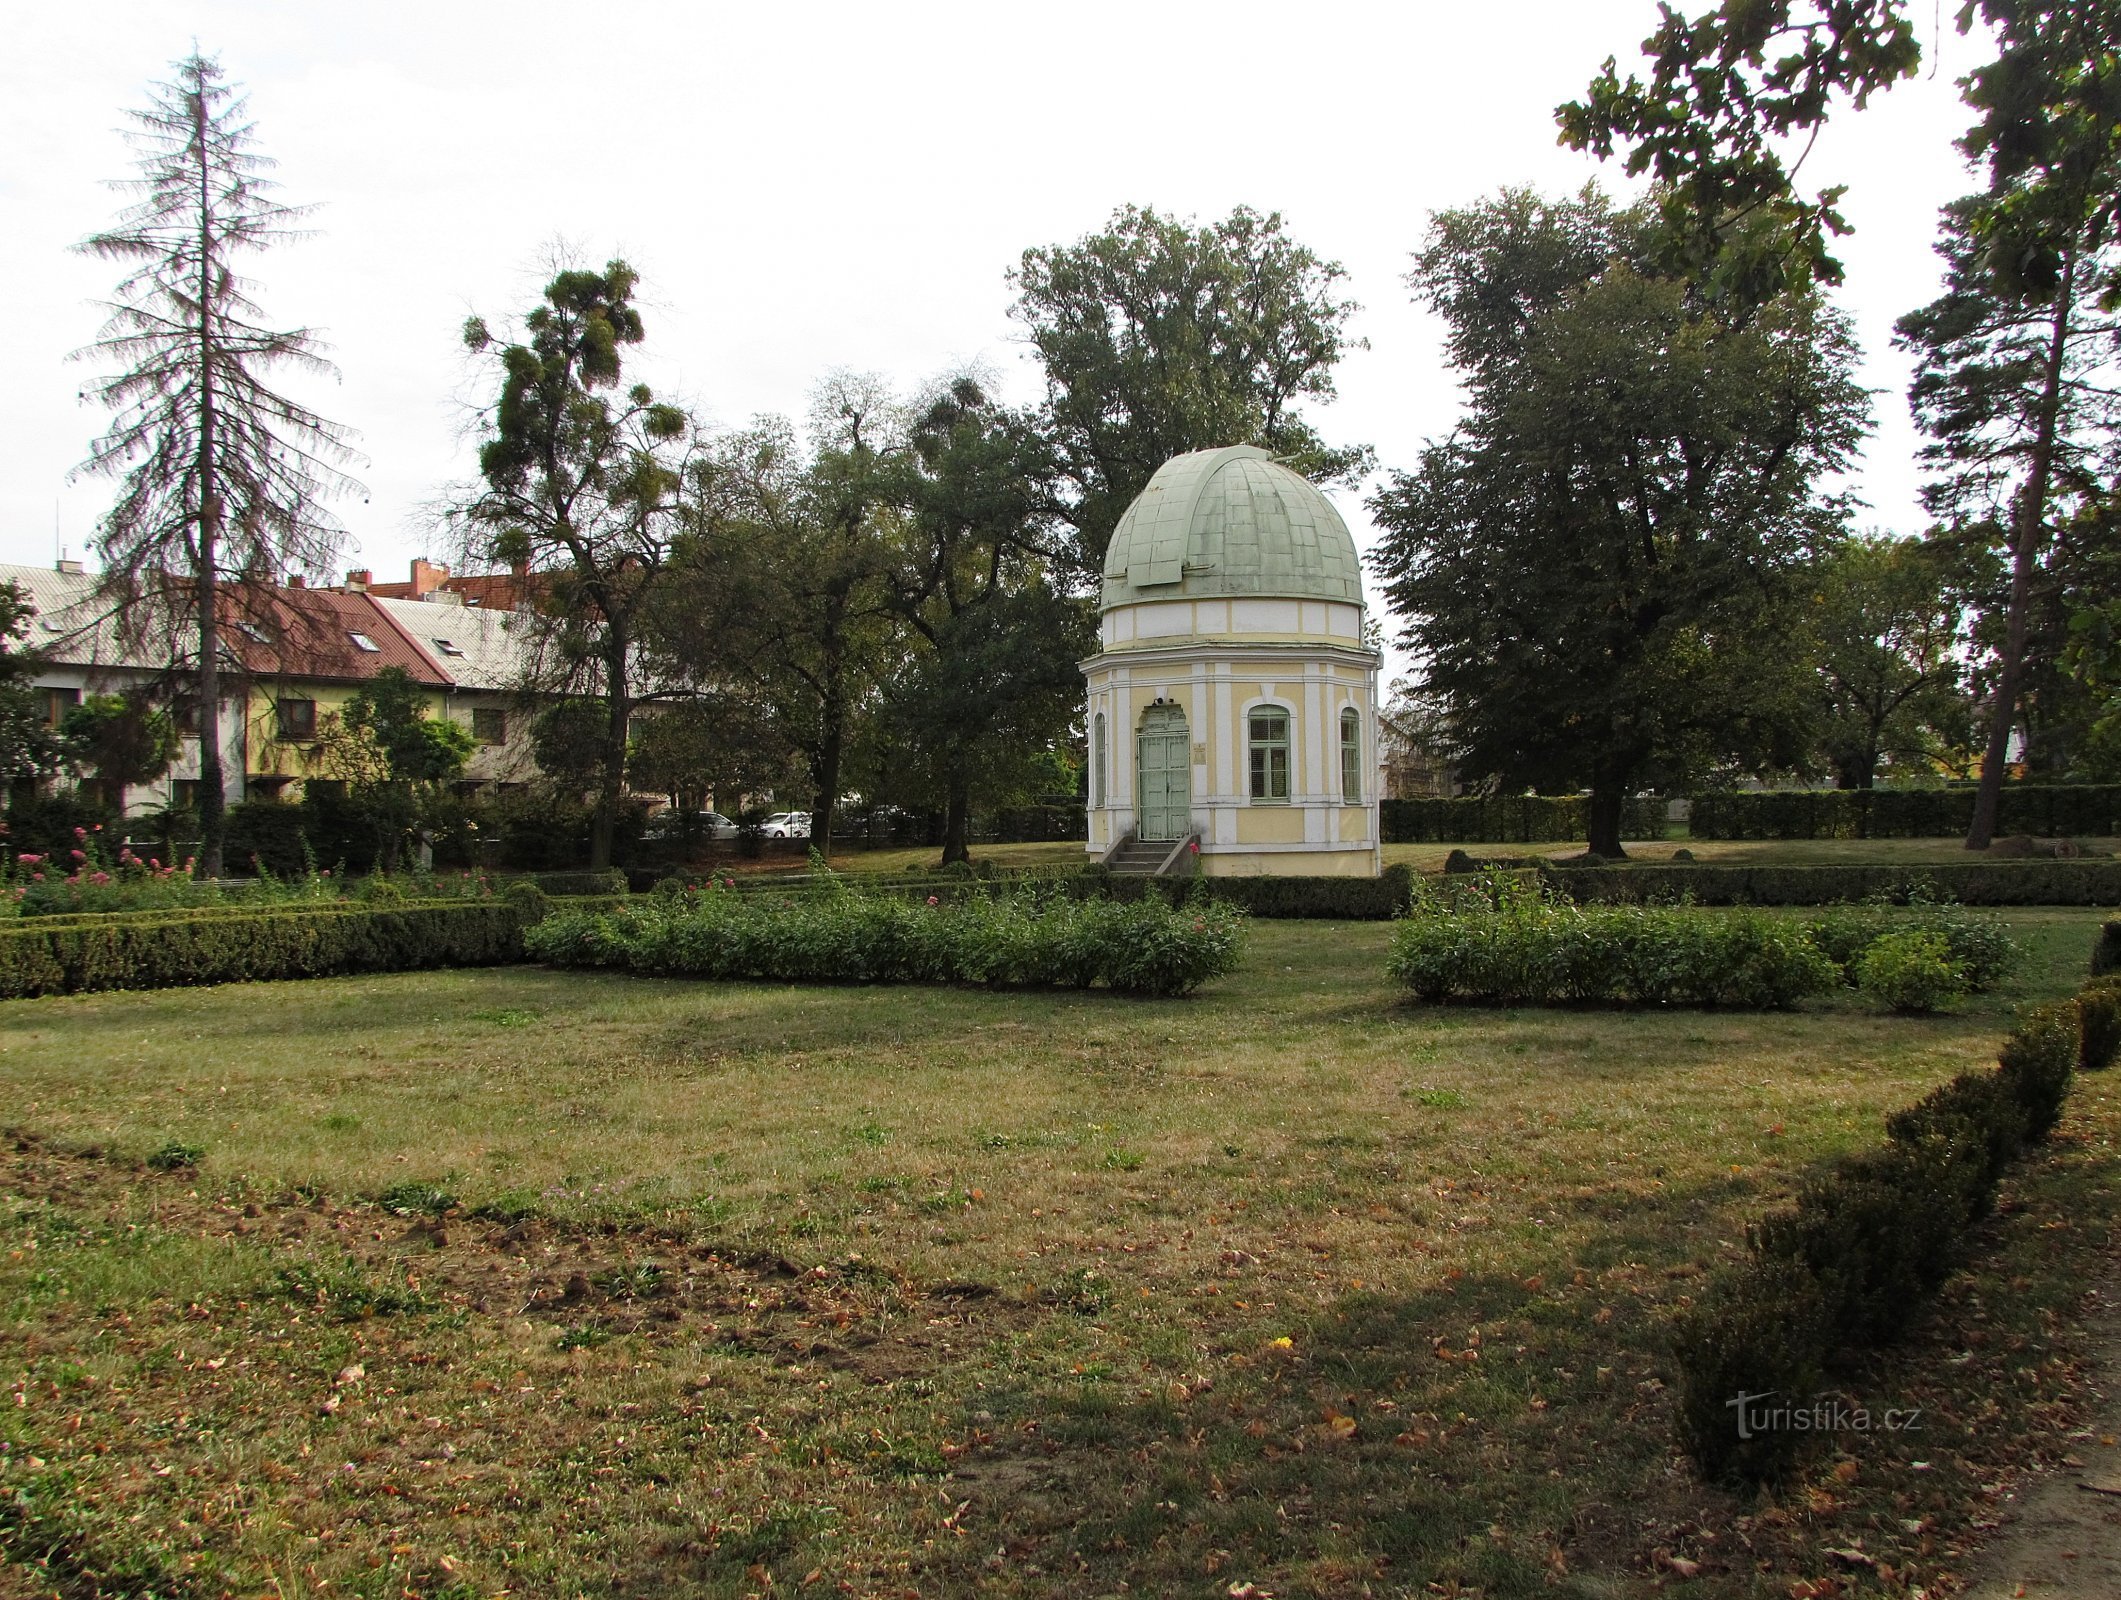 Holešov - μνημείο του συνθέτη και παρατηρητήριο